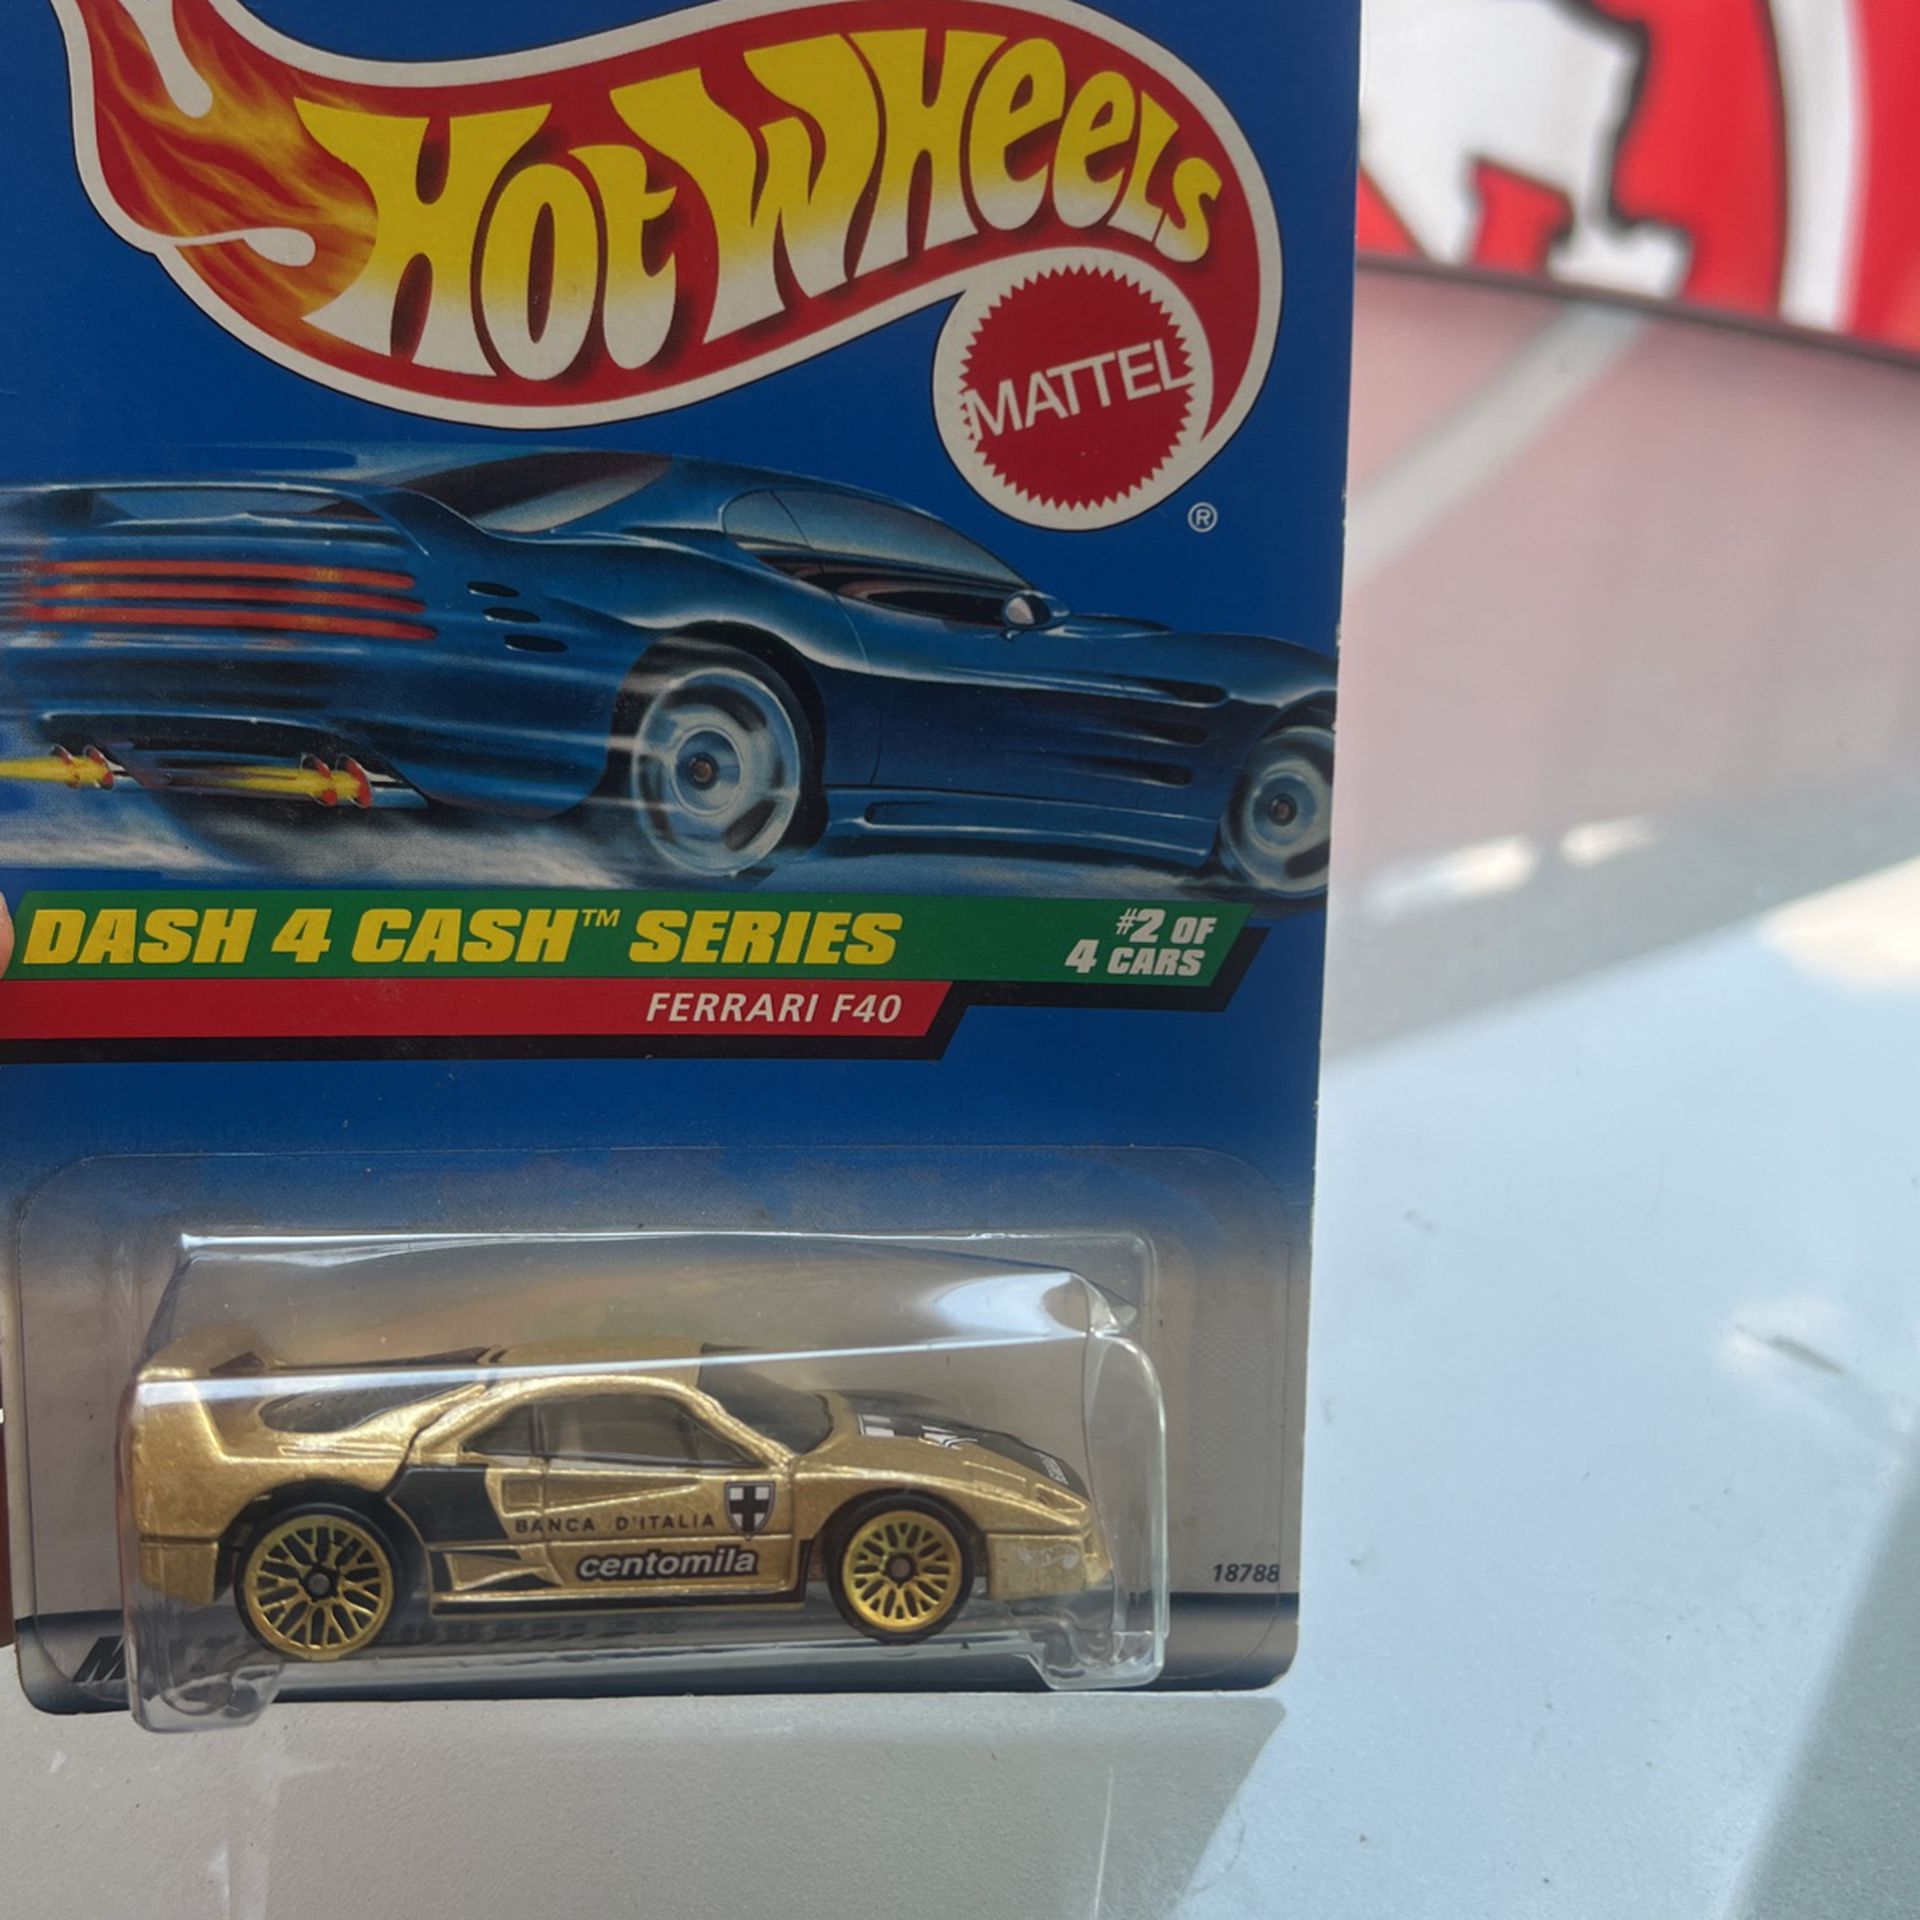 Hot Wheels Dash 4 Cash Series Ferrari F40